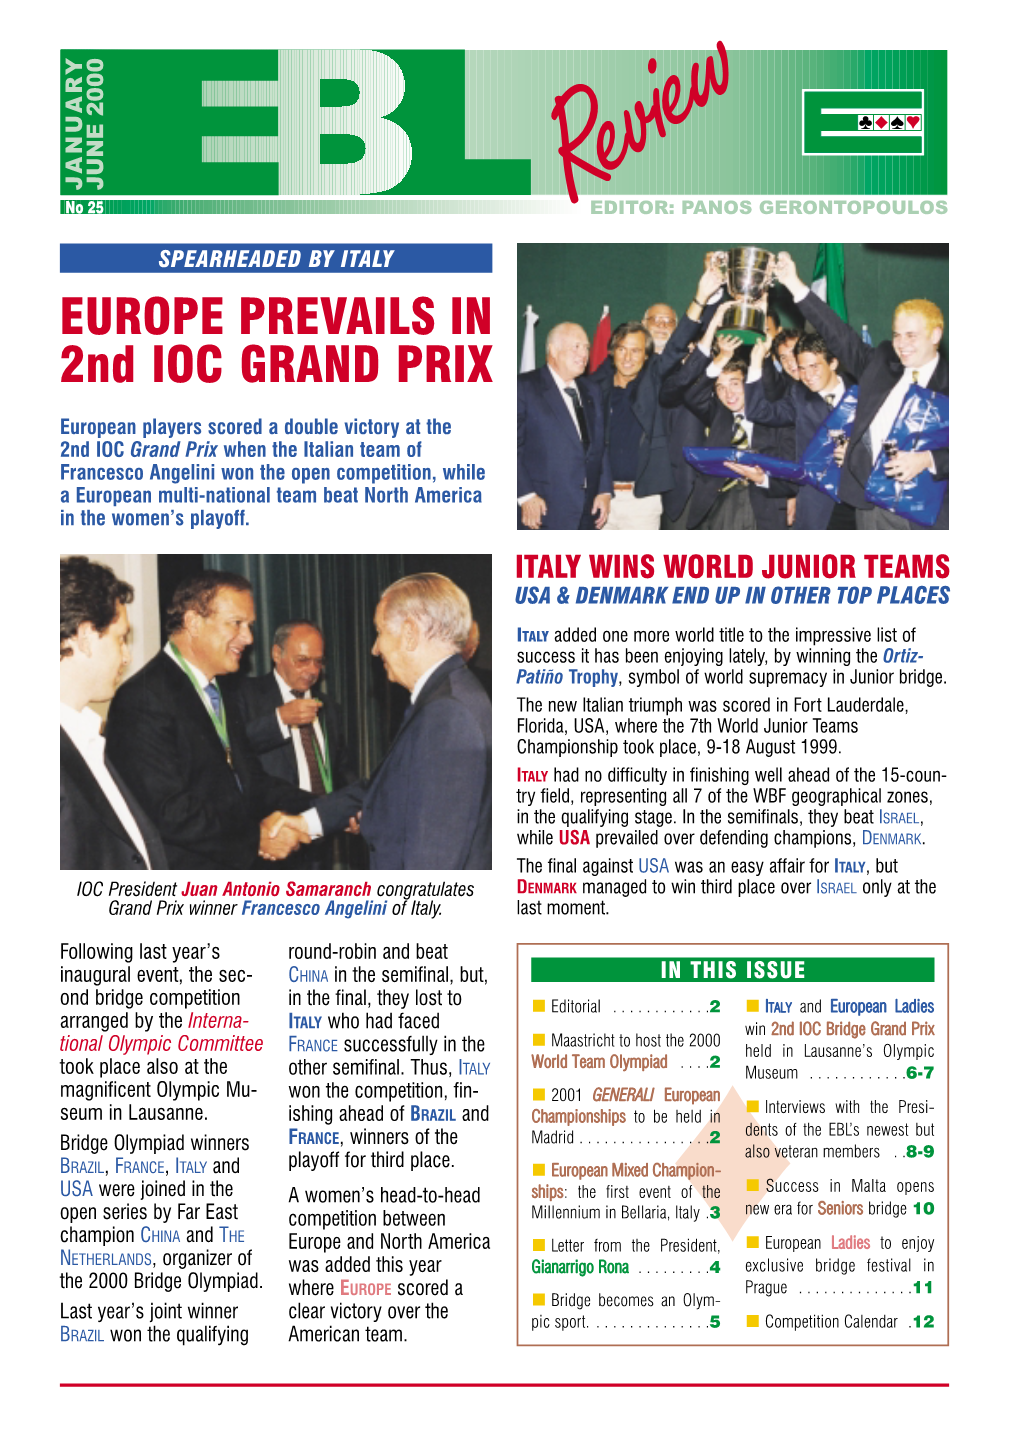 EUROPE PREVAILS in 2Nd IOC GRAND PRIX